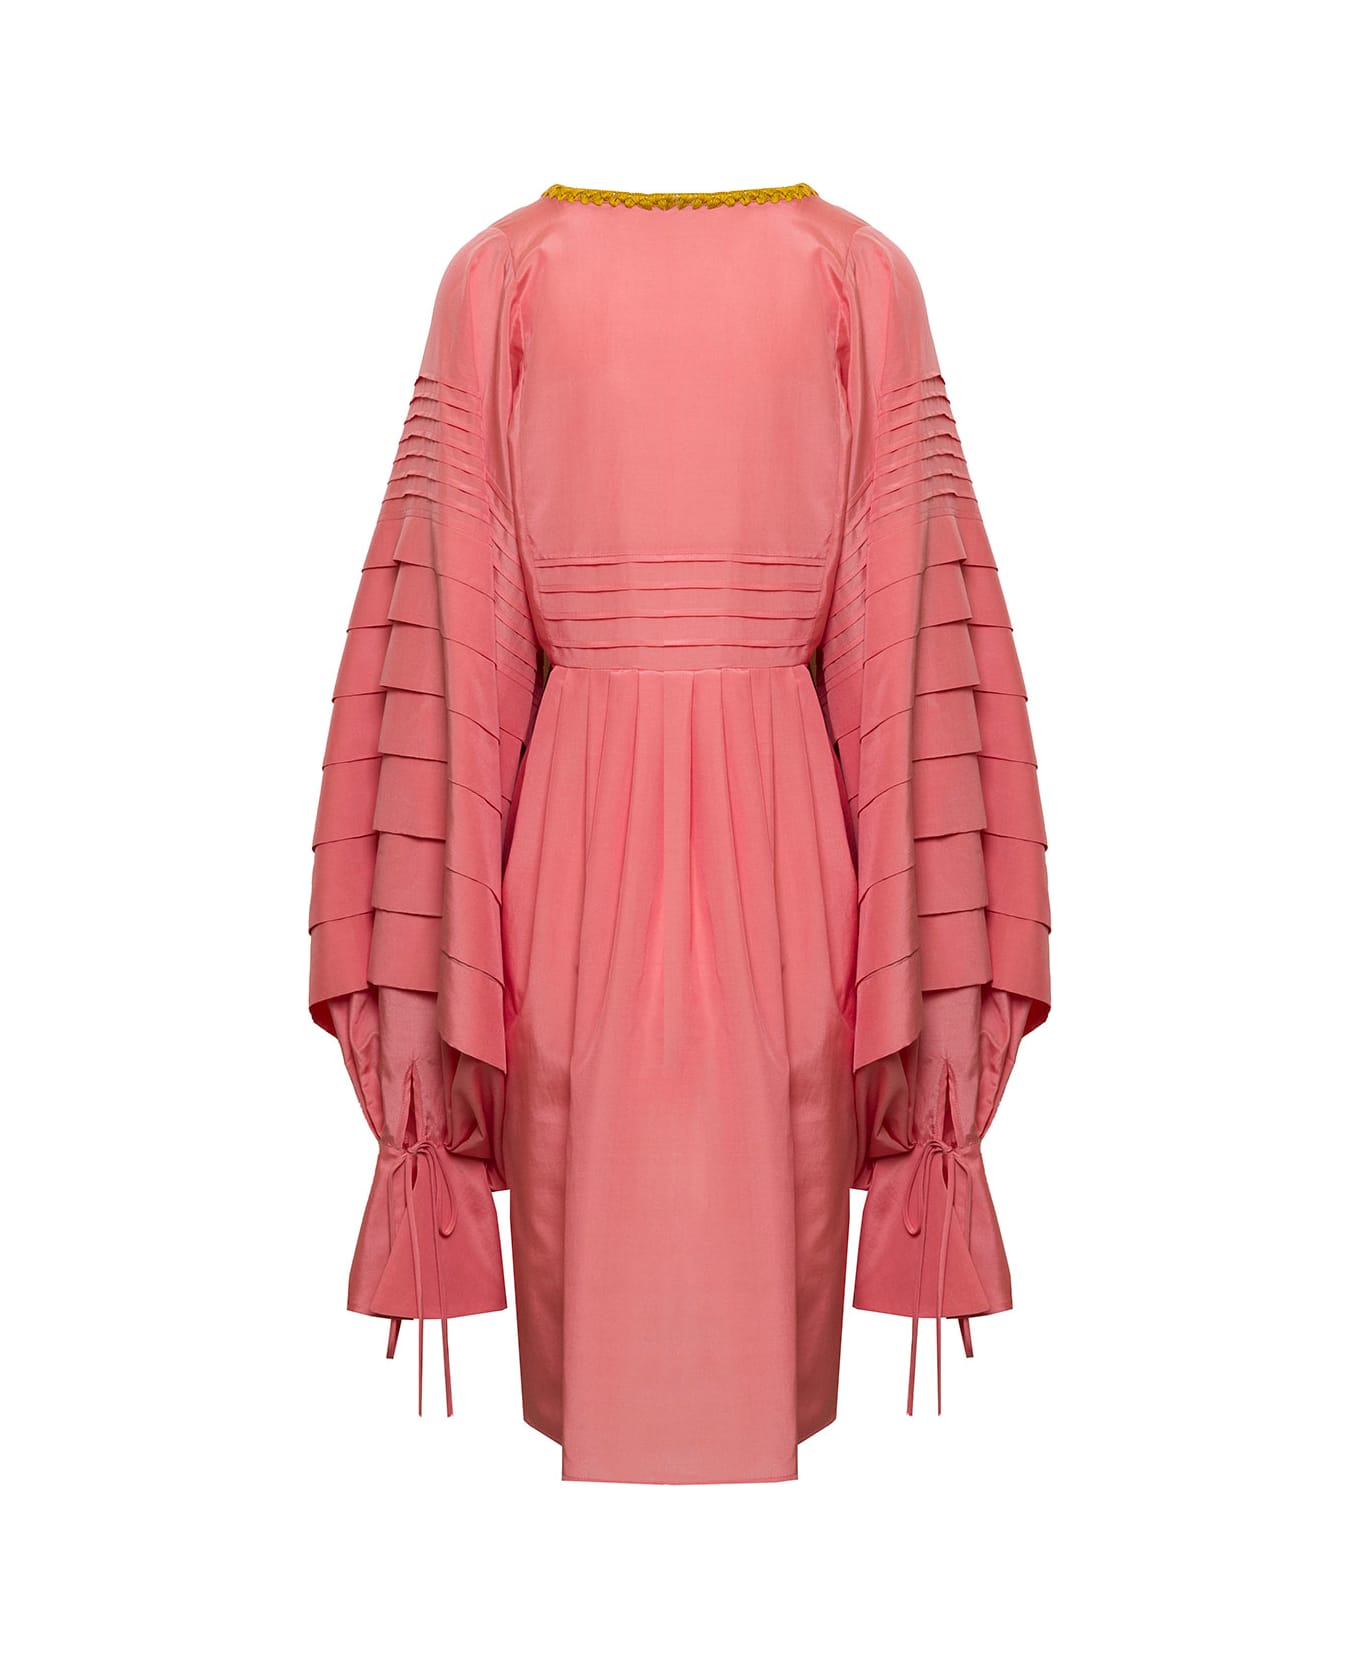 Mario Dice Woman's Pink Cotton Blend Dress - Pink ワンピース＆ドレス